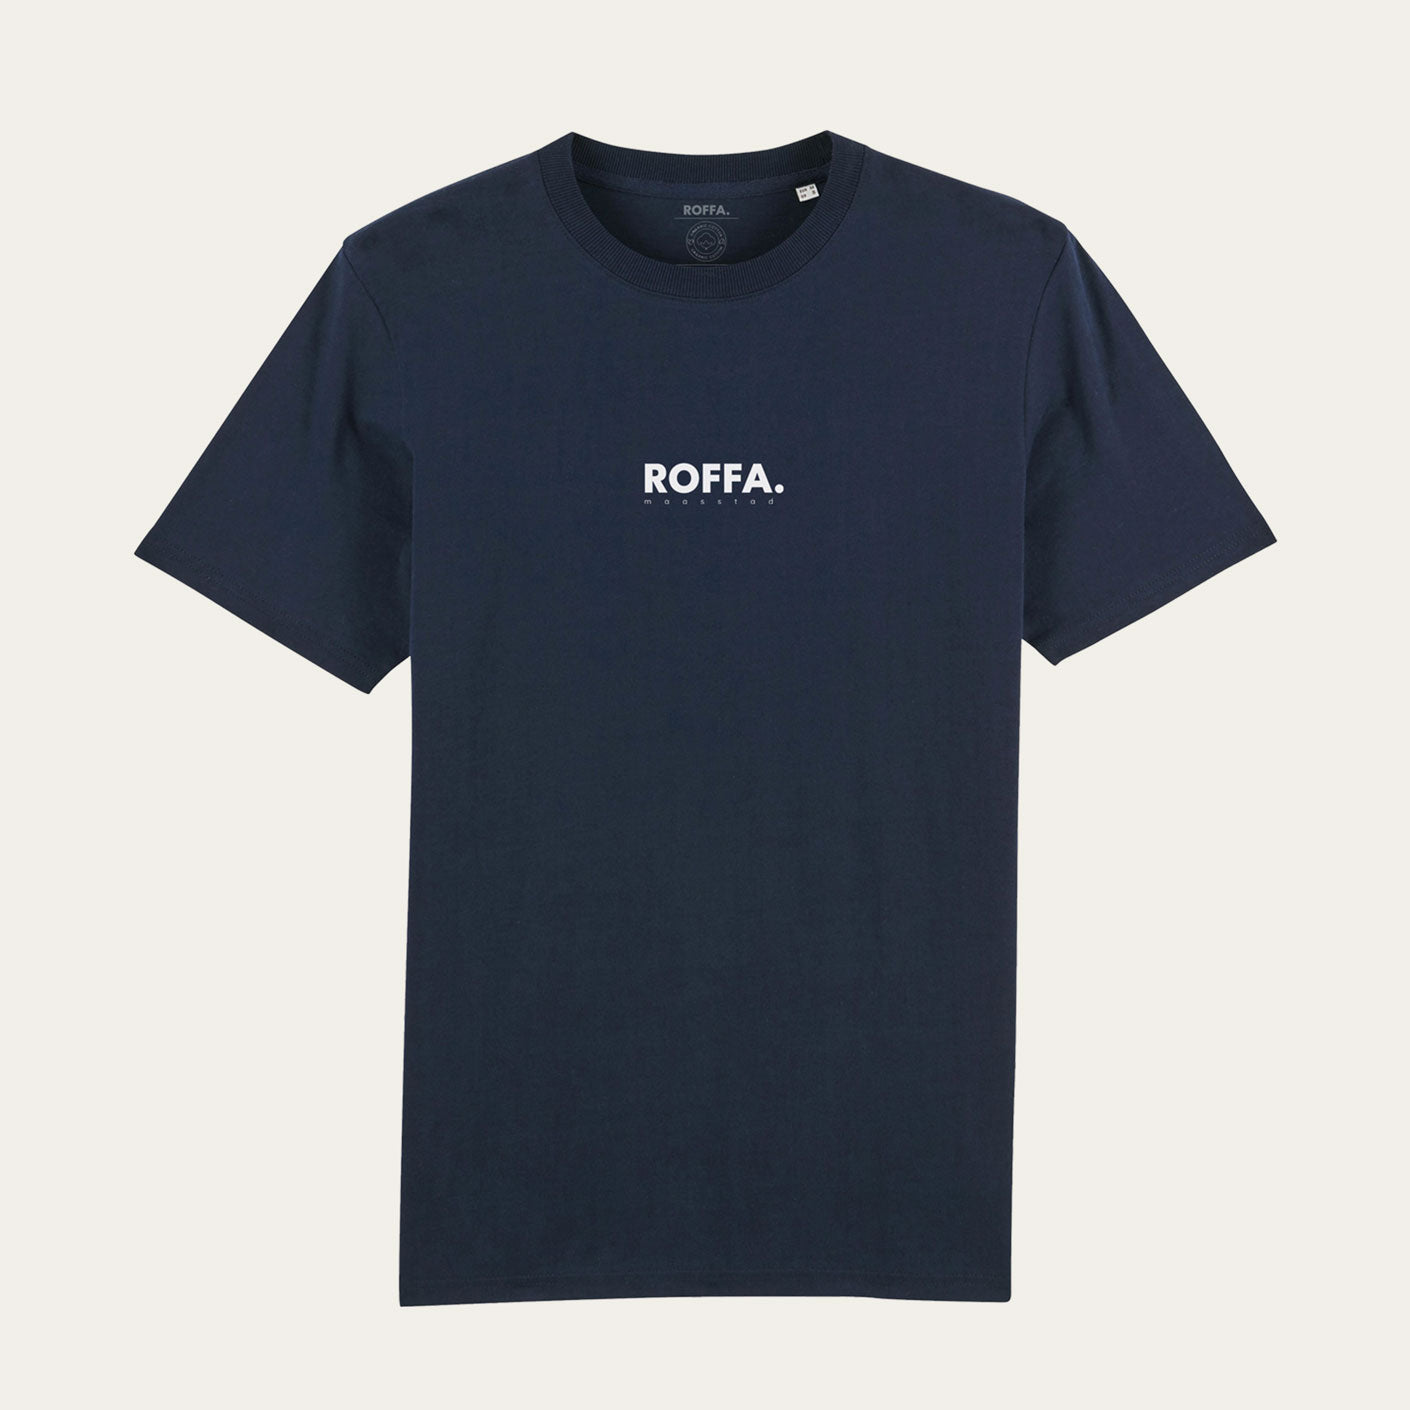 Blauw t-shirt met groot roffa logo